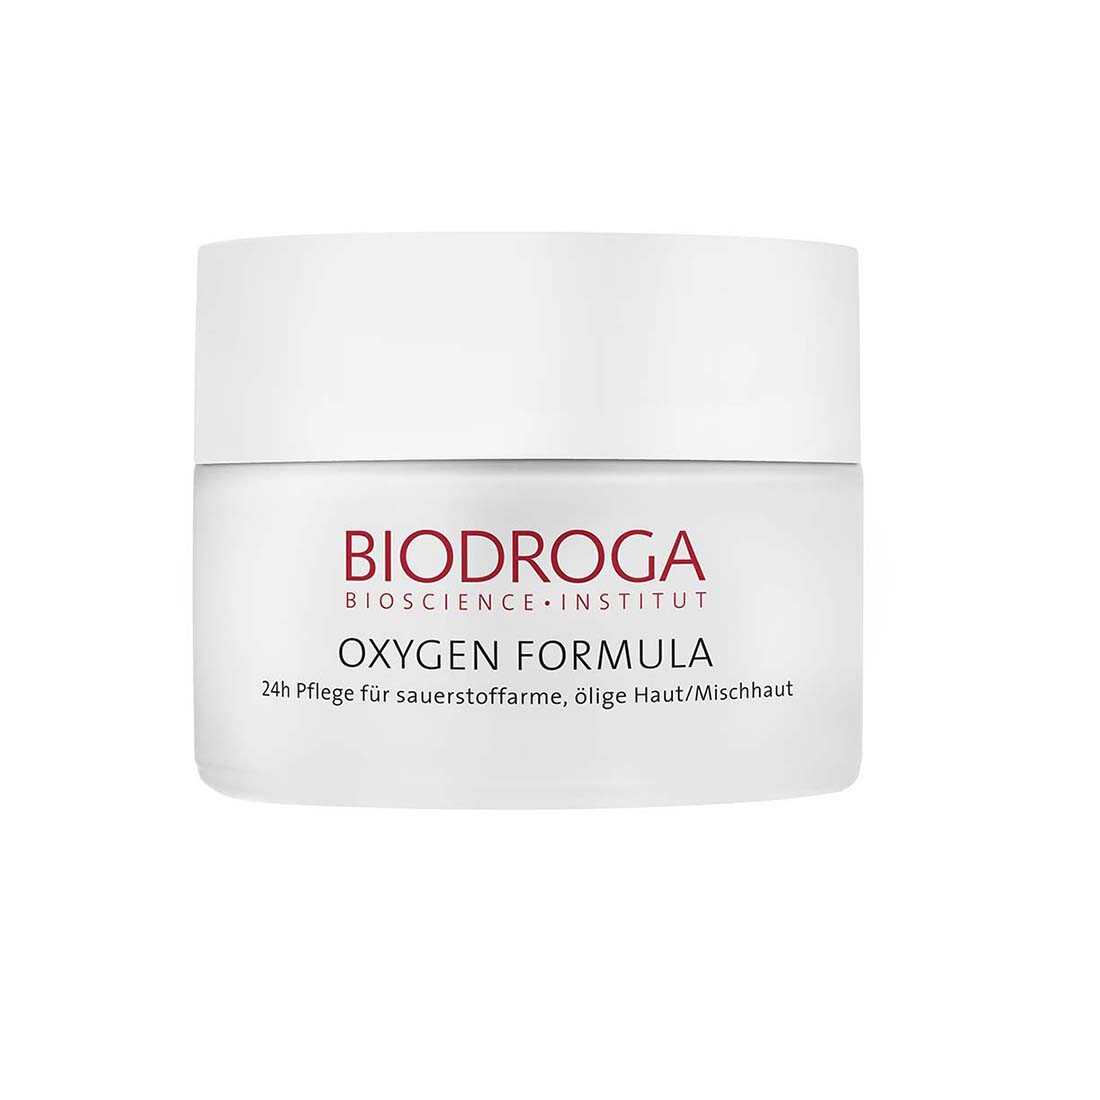 BIODROGA Oxygen Formula 24h Care sallow,oily/combination skin